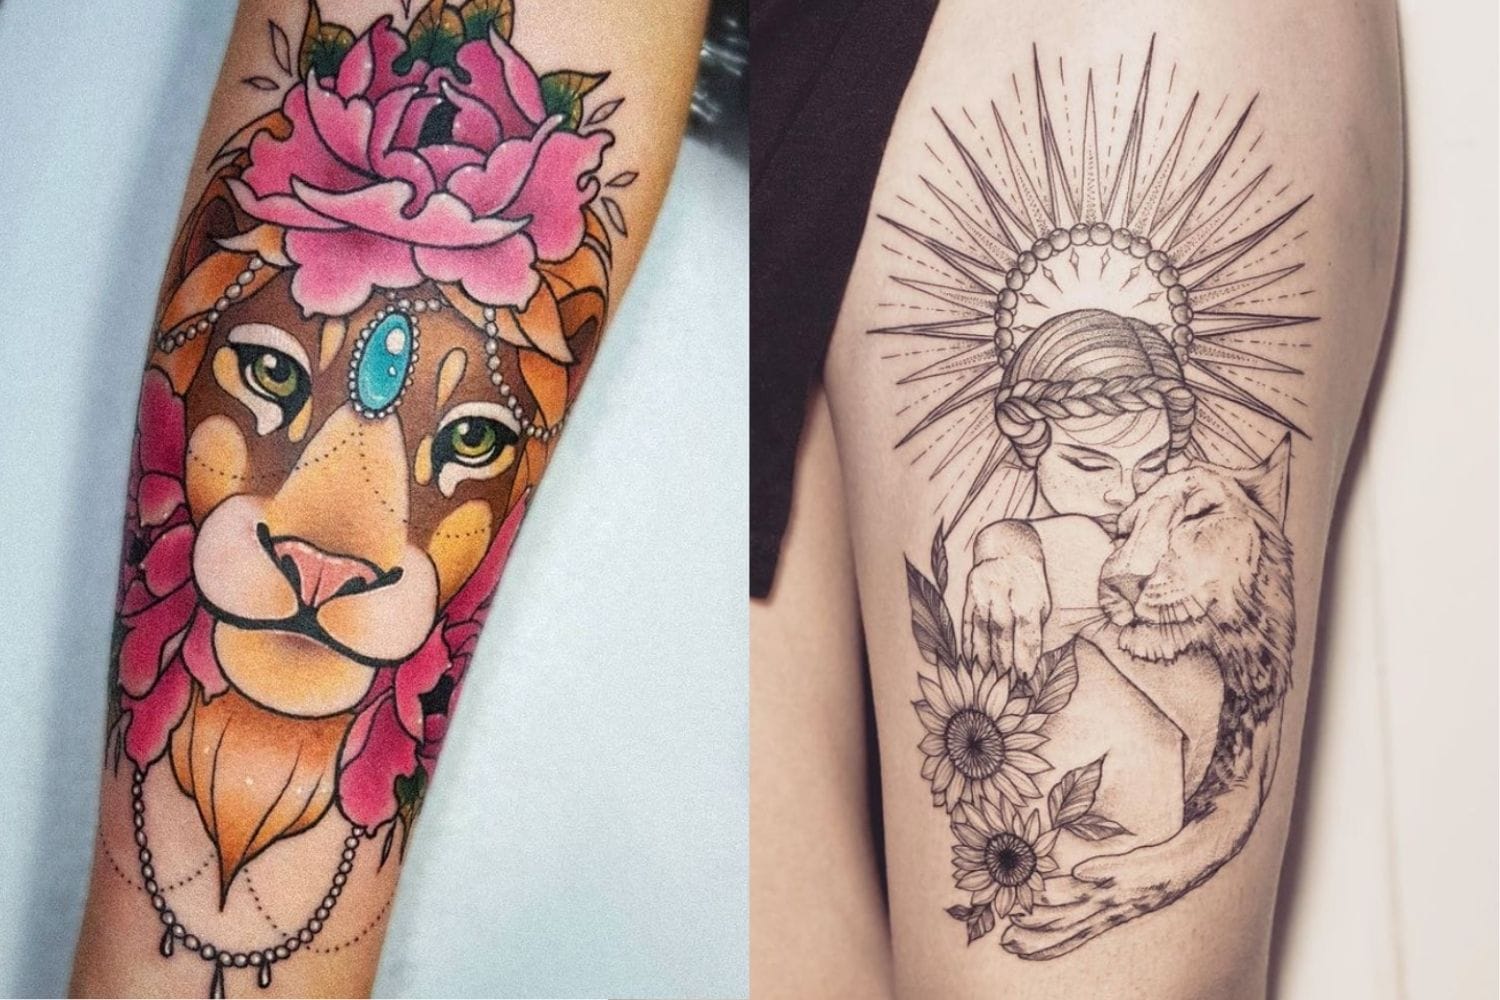 Temporary Tattoo Lion Queen Jewels Mandala Fake Body Art Sticker Waterproof  | eBay